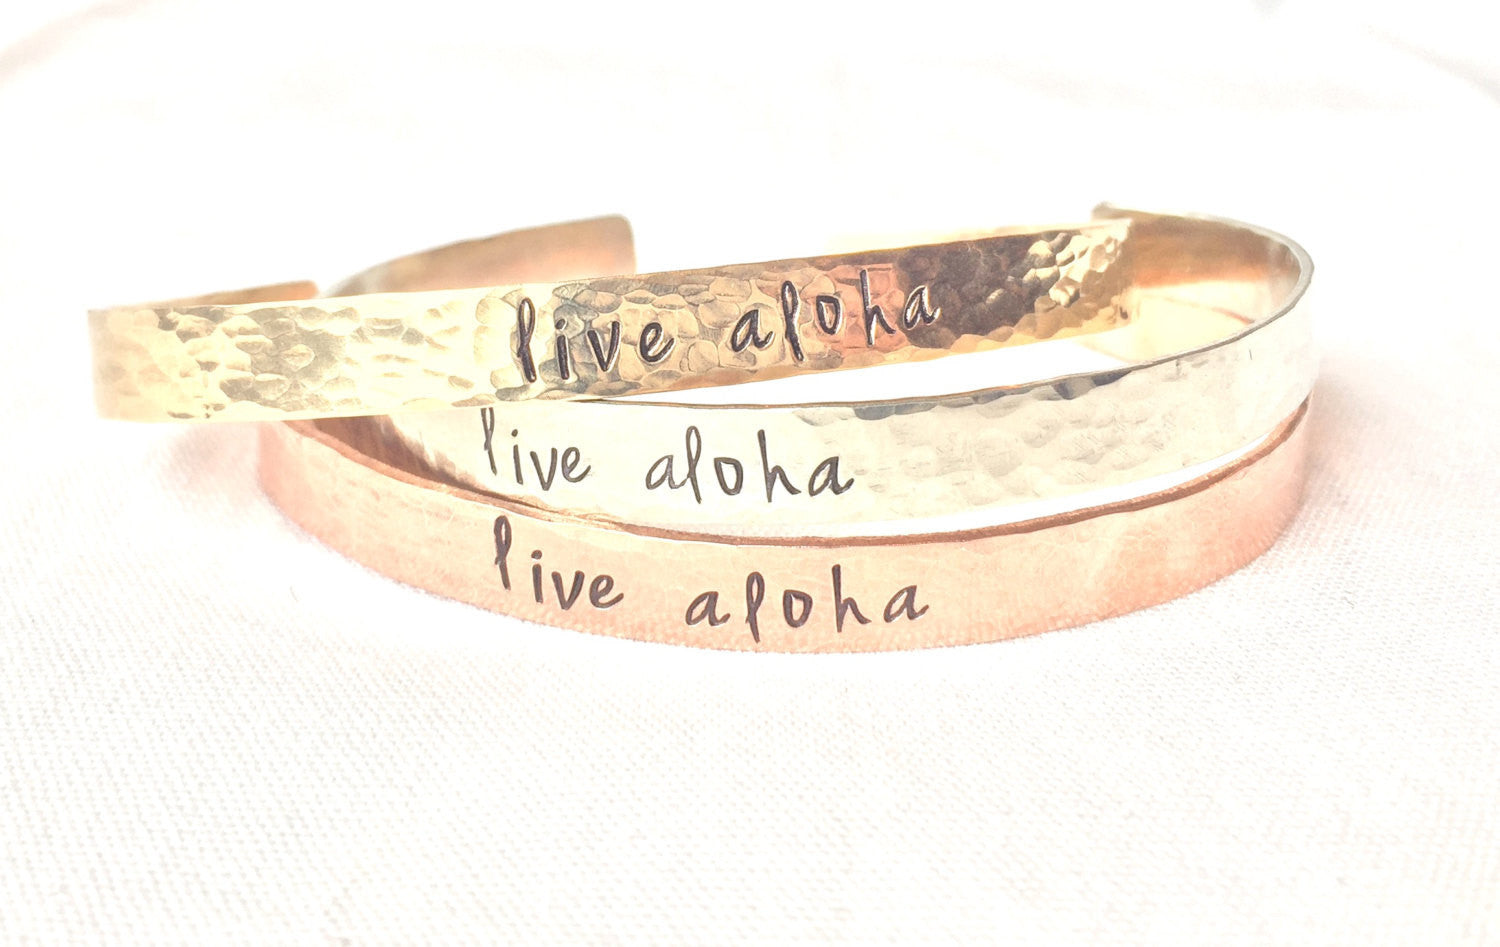 Live Aloha Bracelet, Christmas Gifts - Natashaaloha, jewelry, bracelets, necklace, keychains, fishing lures, gifts for men, charms, personalized, 